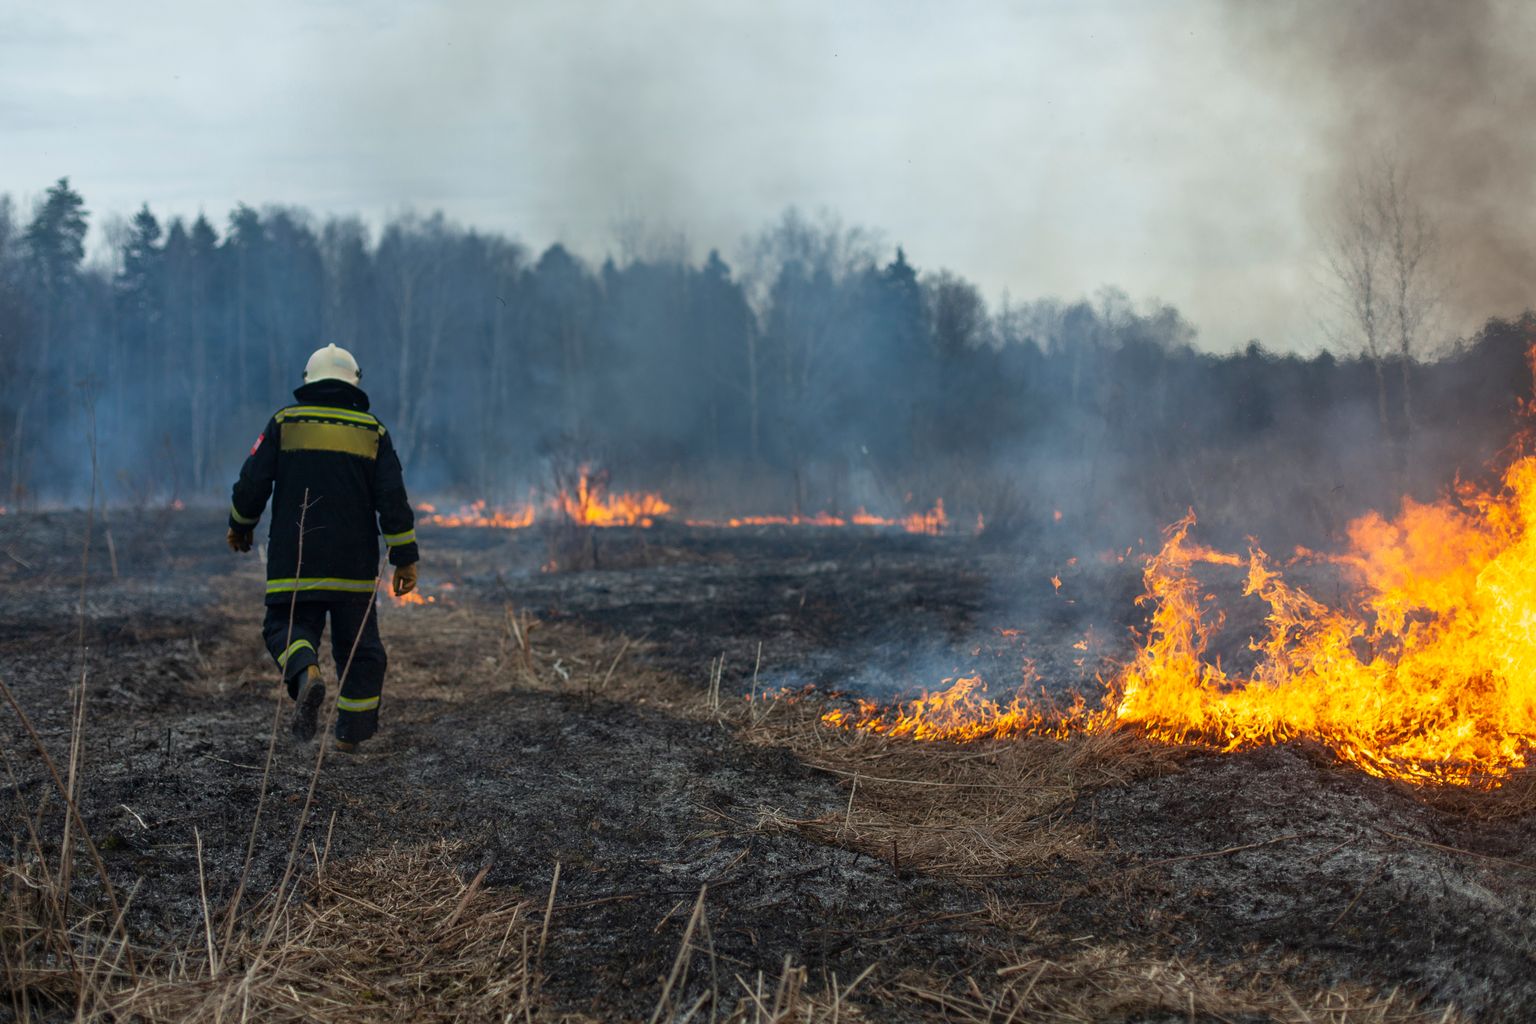 Firefighter passes through burning landscape